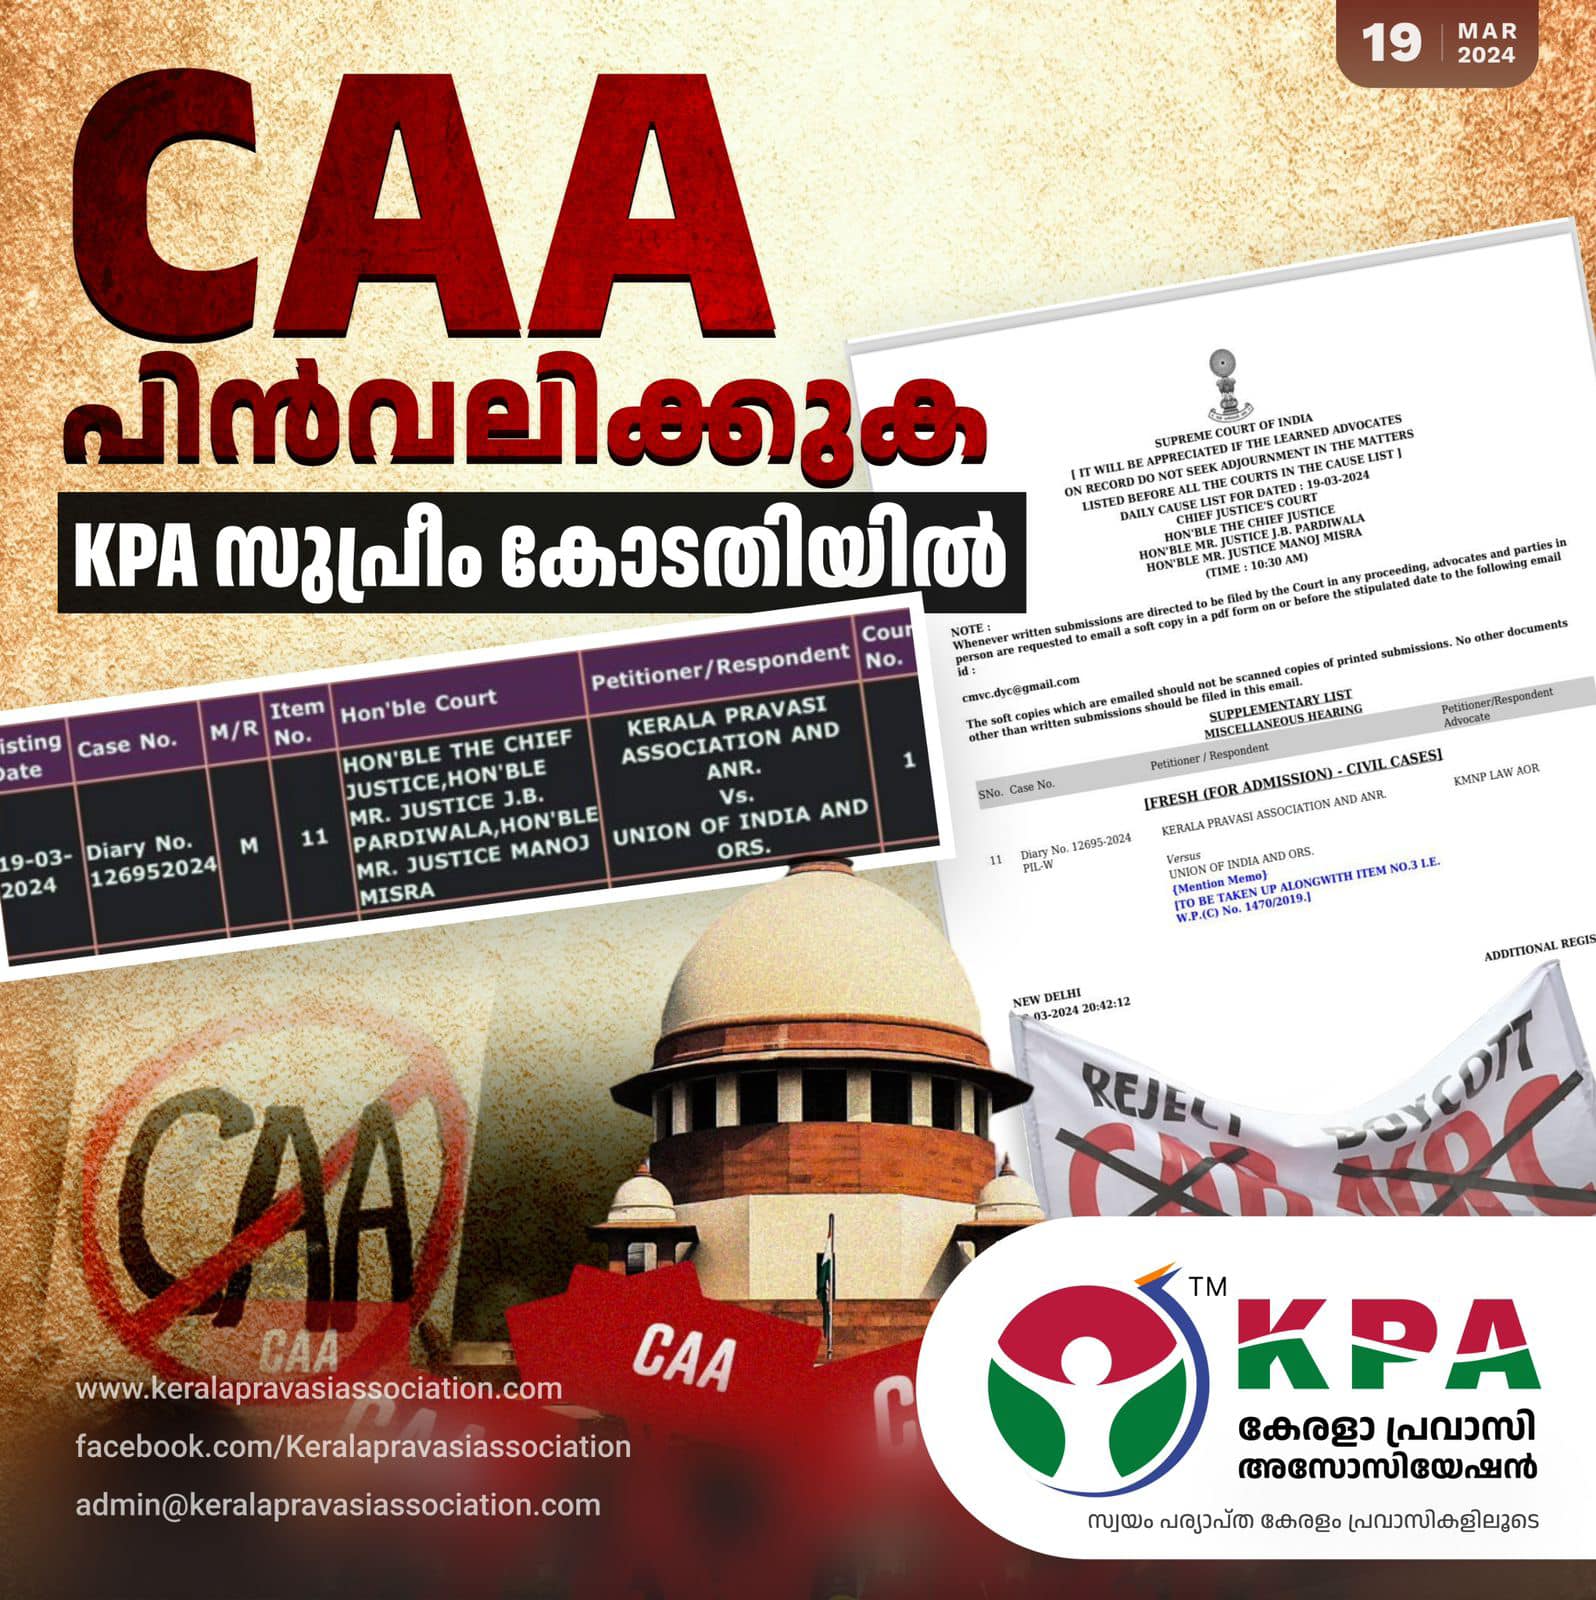 Do not break our brotherhood: KPA opposes the Citizenship Amendment Bill